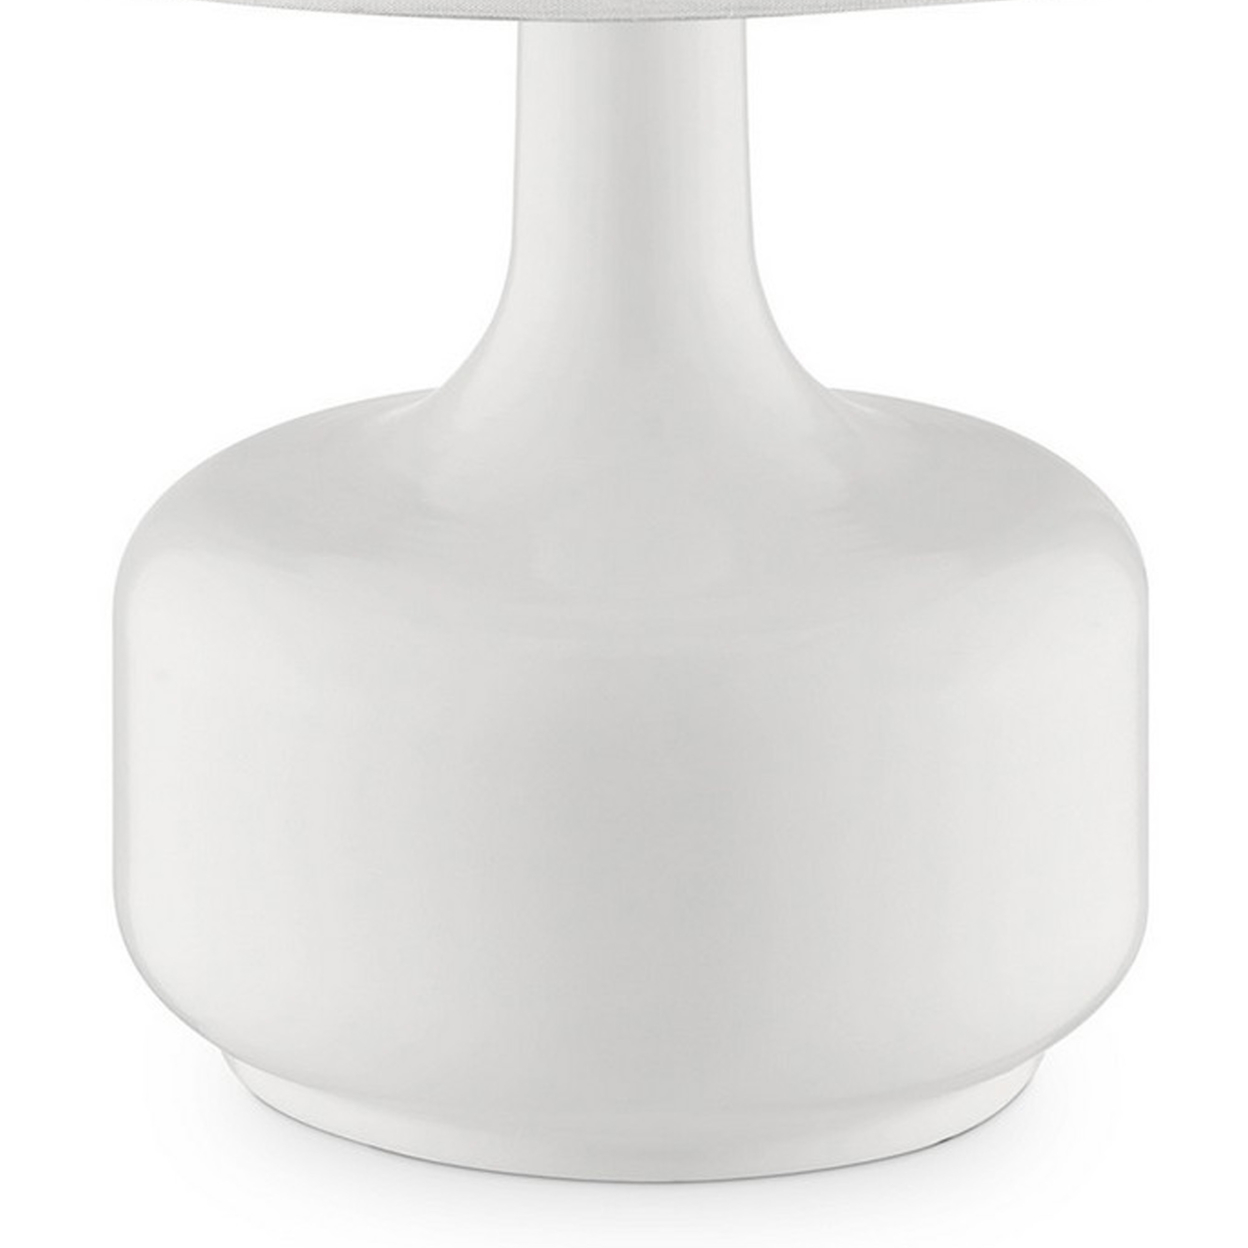 Table Lamp With Teardrop Metal Base And Fabric Shade, White- Saltoro Sherpi